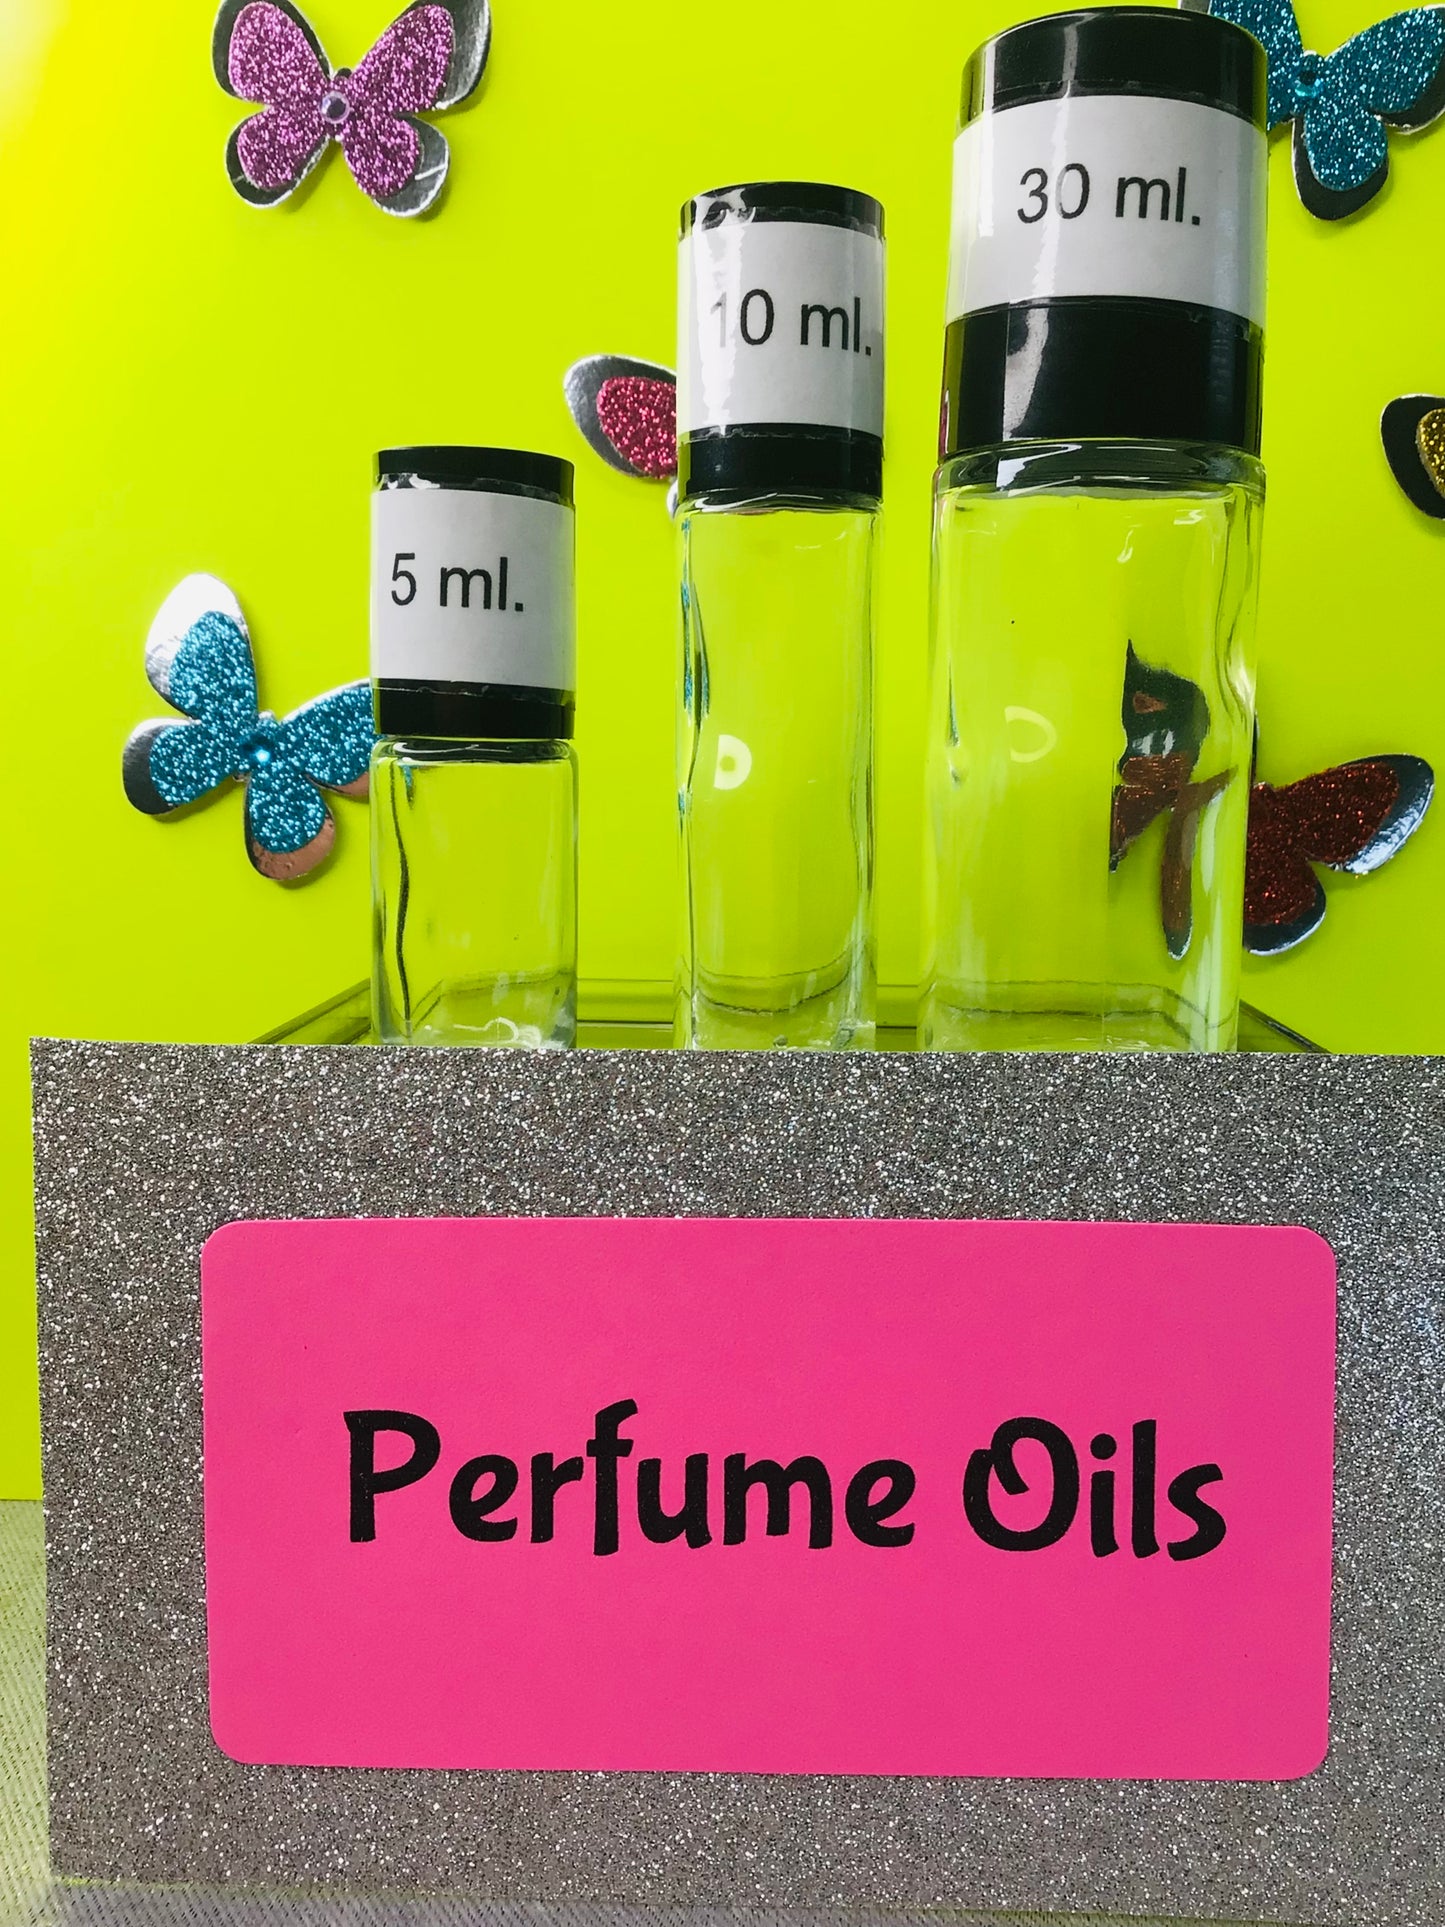 Perfume Oils, Best Selling, Designer Fragrances, Premium Quality, Long Lasting Oils